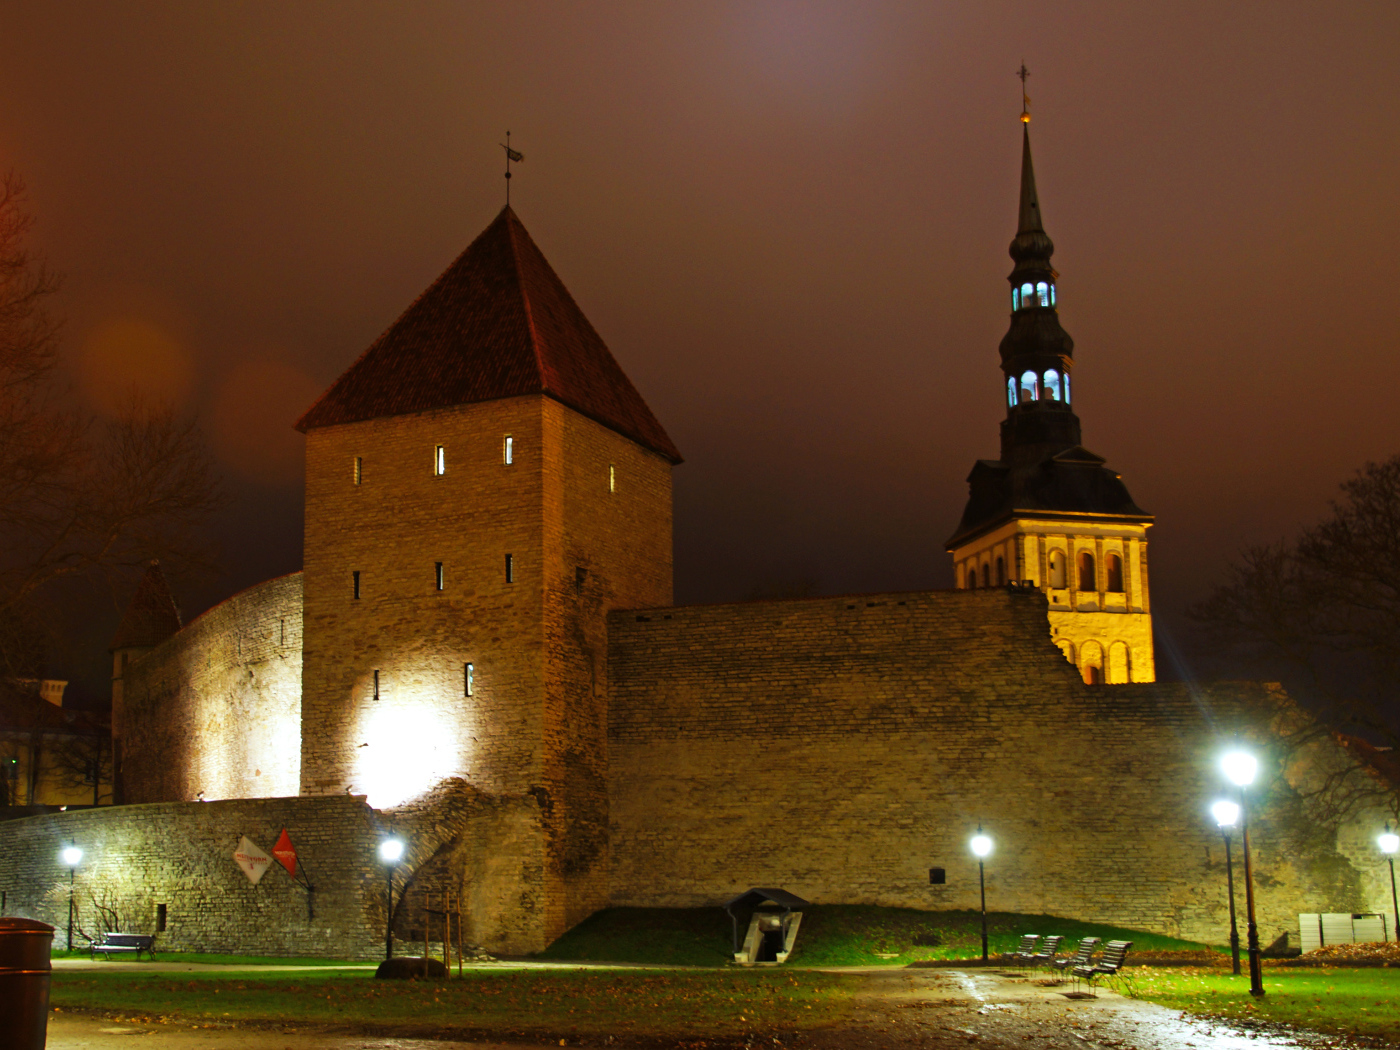 Viru gate of the medieval fortress, Tallinn. Estonia